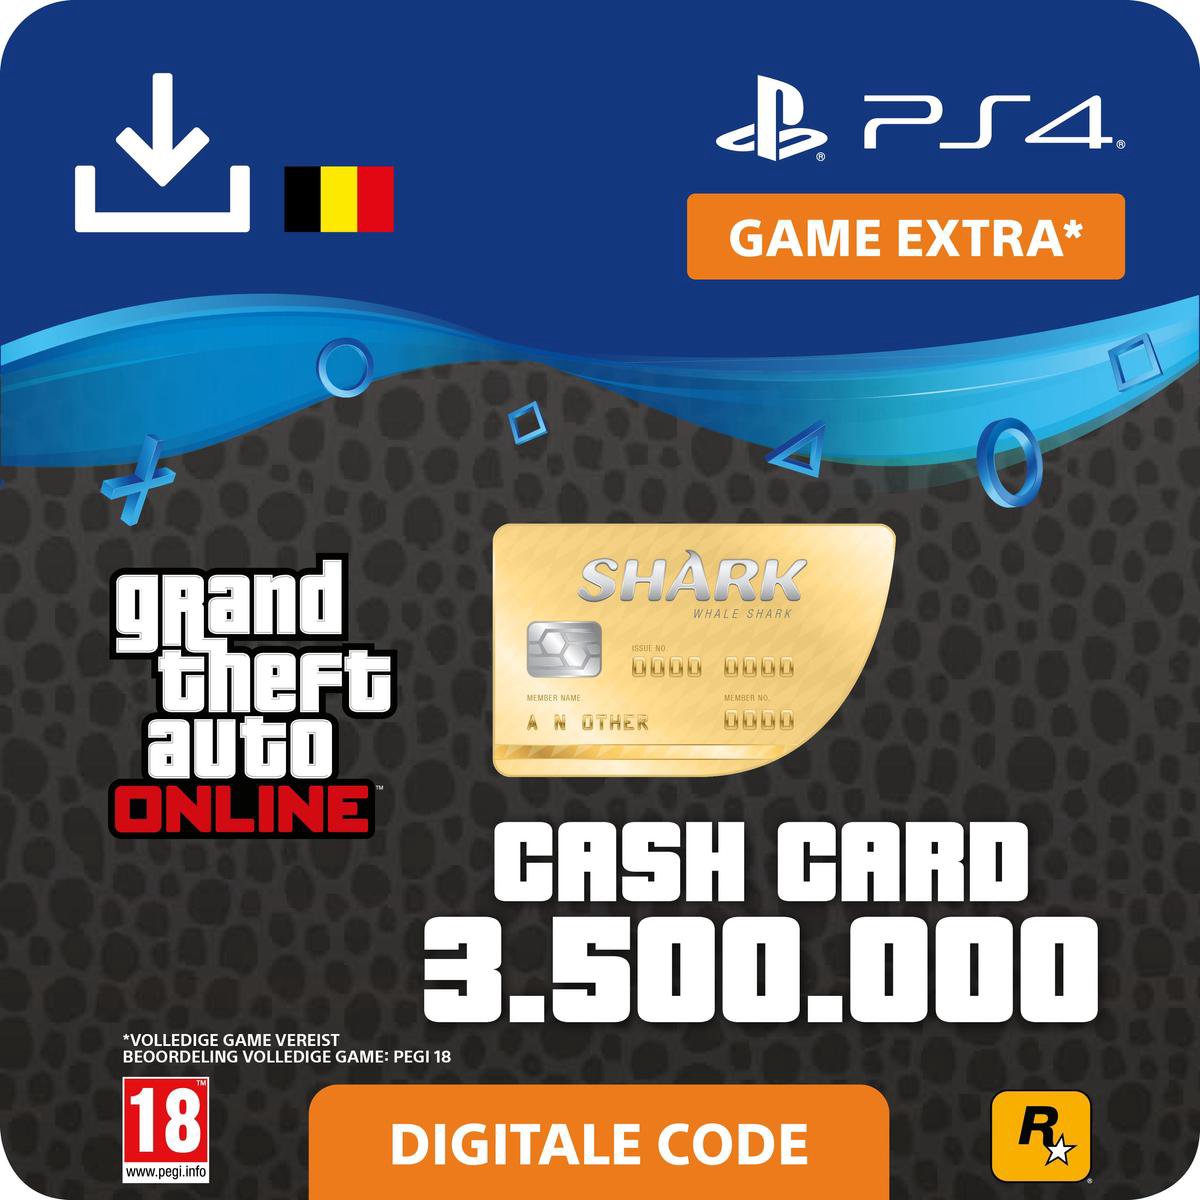 GTA V - digitale valuta - 3.500.000 GTA dollars Whale Shark - NL - PS4 download - Sony digitaal